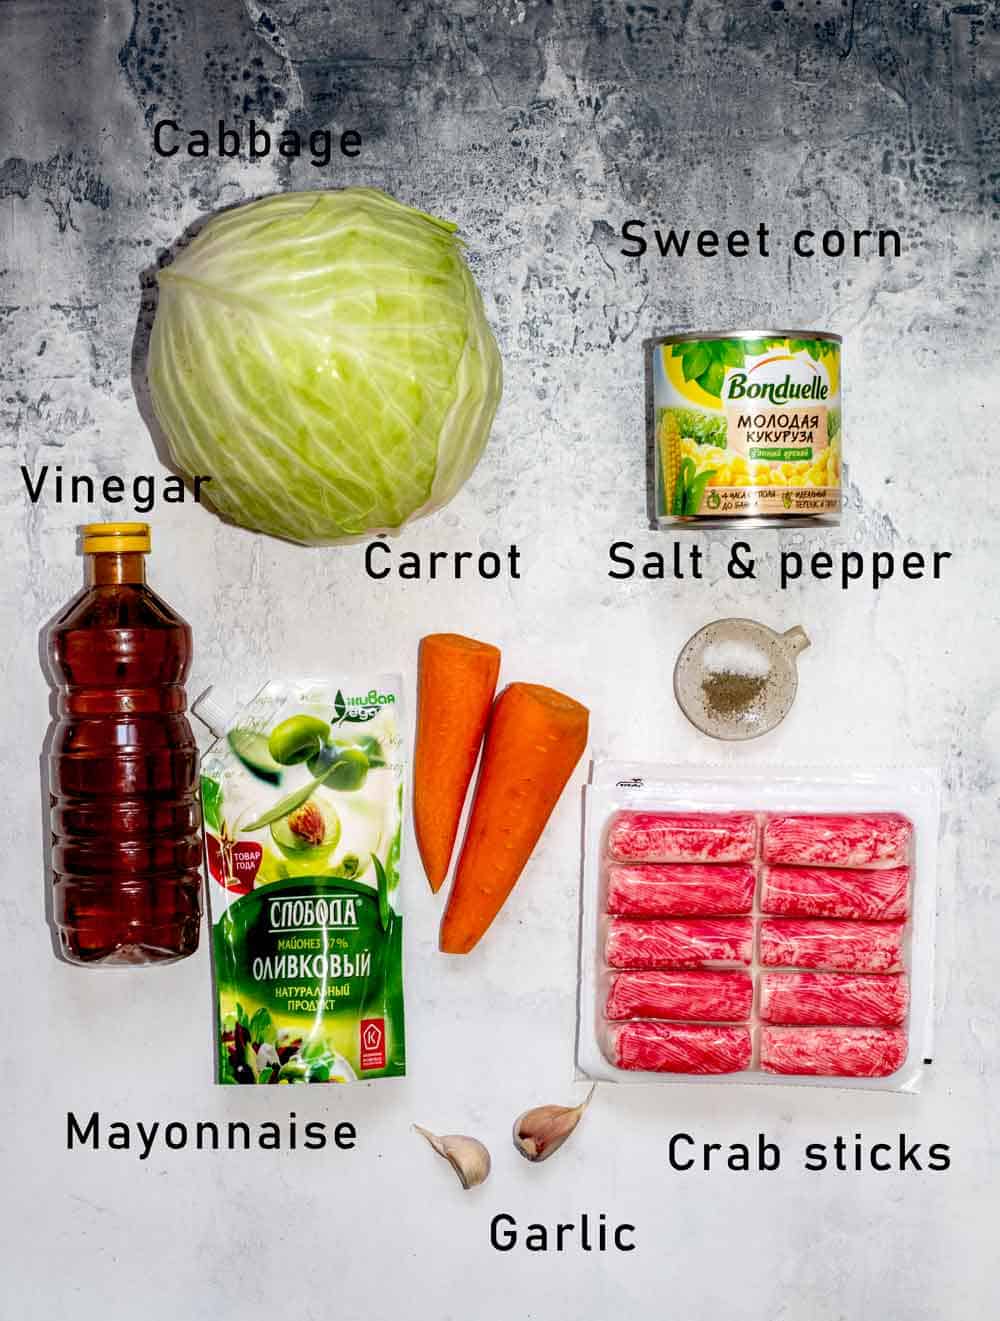 imitation crab and cabbage salad ingredients